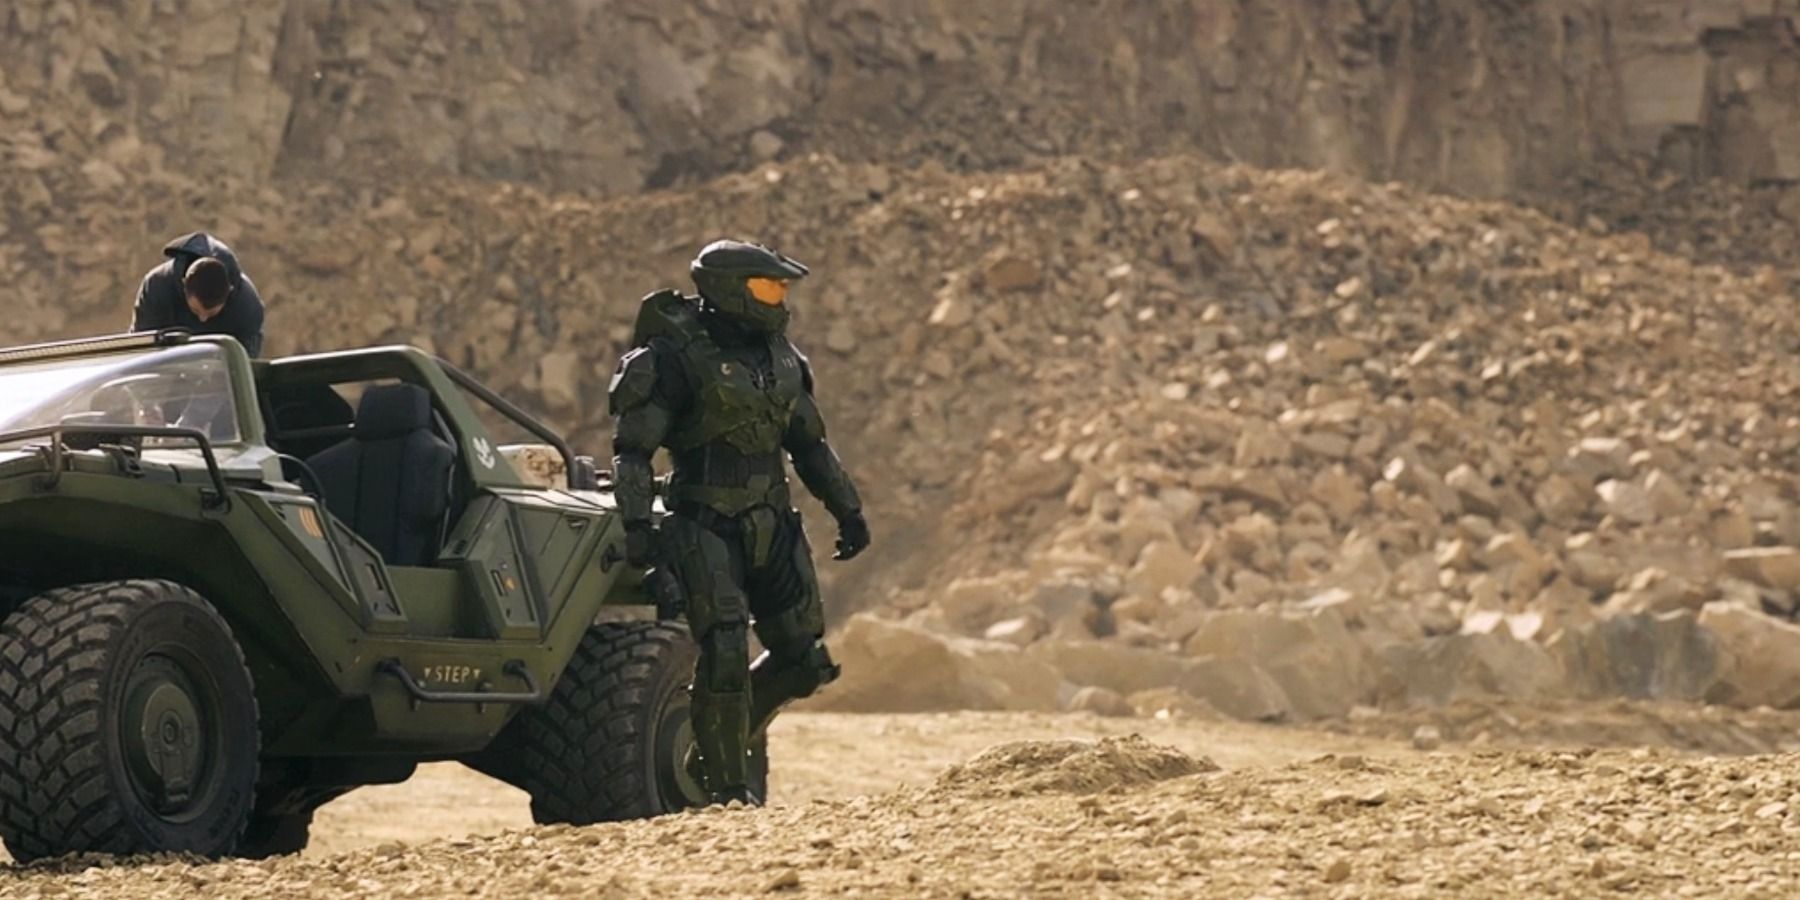 Master Chief with Warthog in Halo series desert